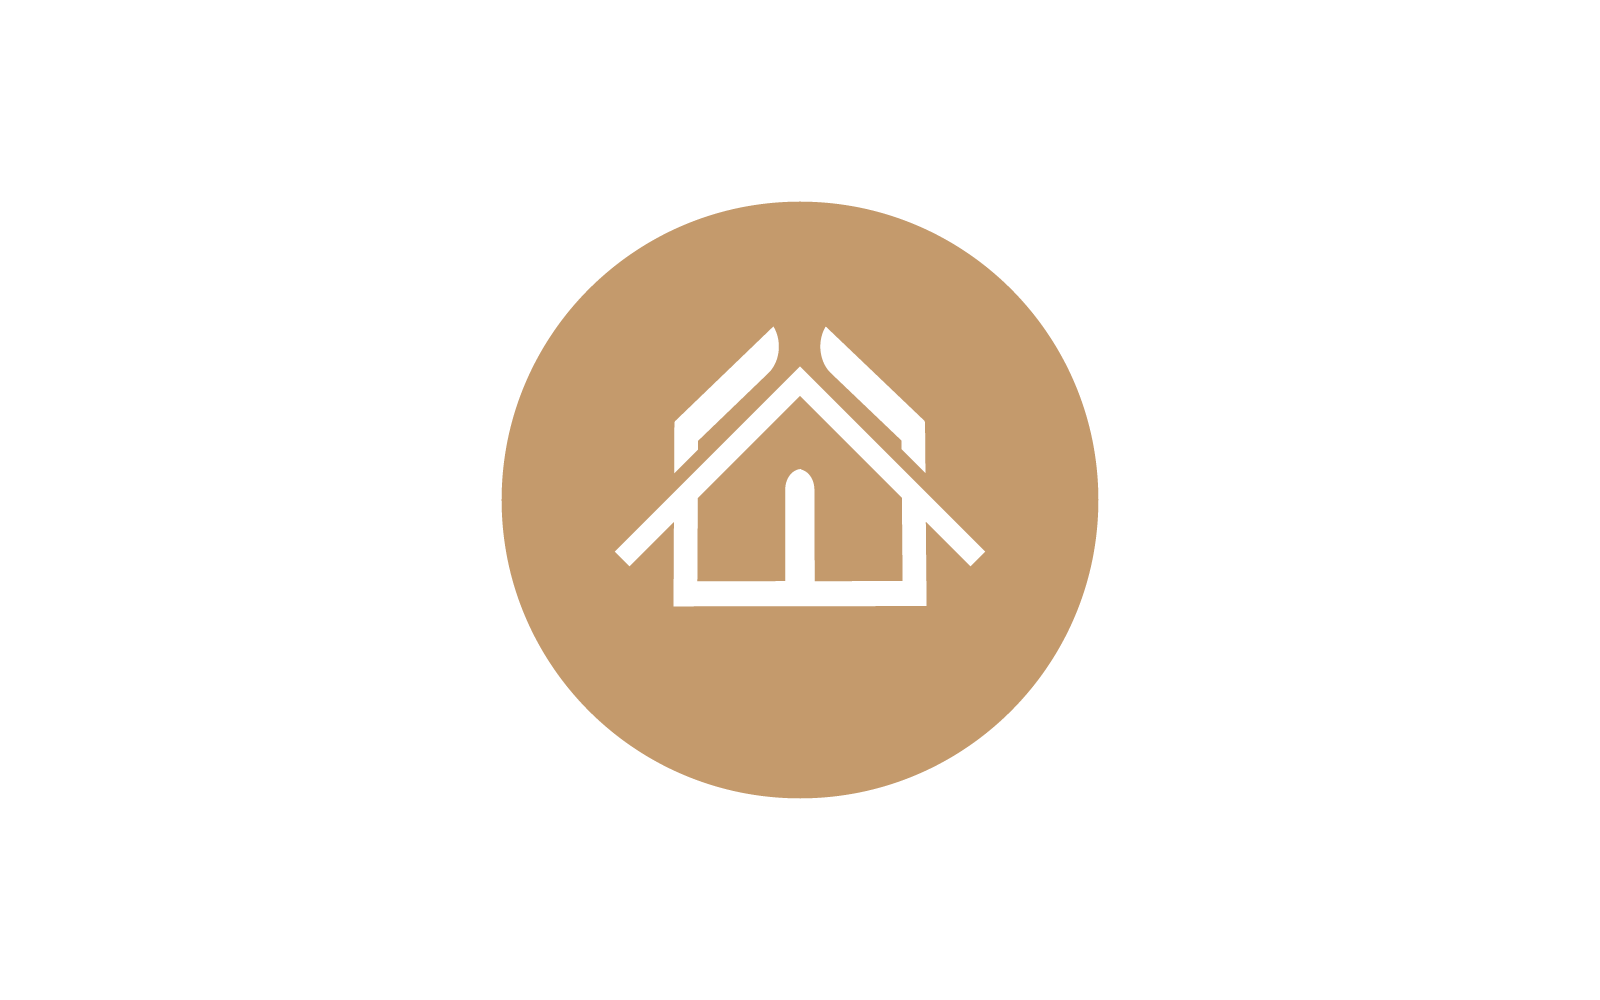 H Letter Property Logo icon vector design Template